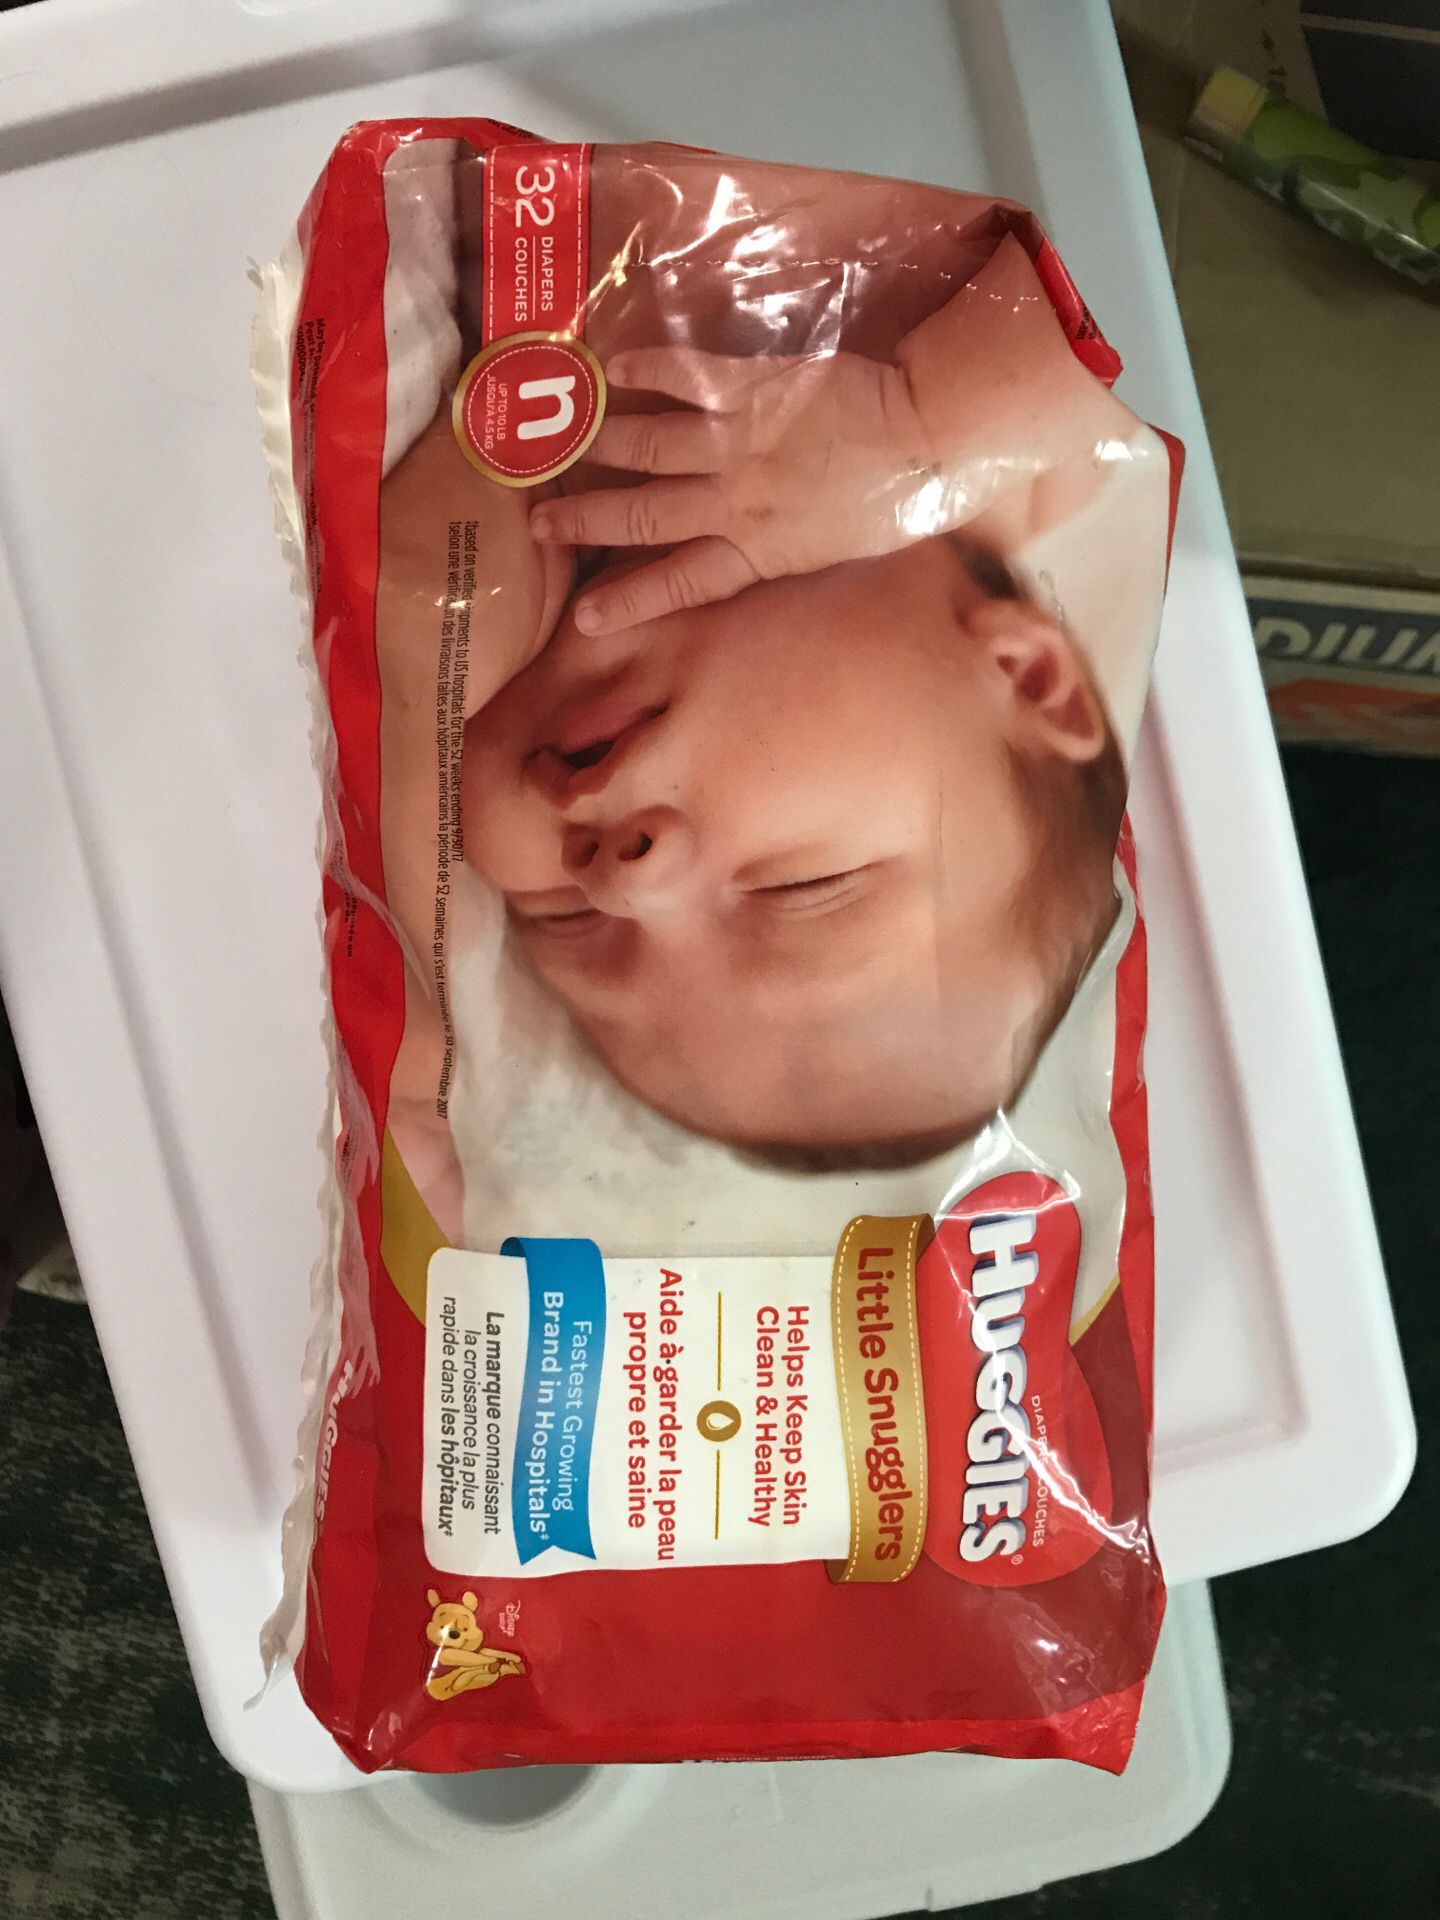 Free Huggies newborn size diapers - OPEN package